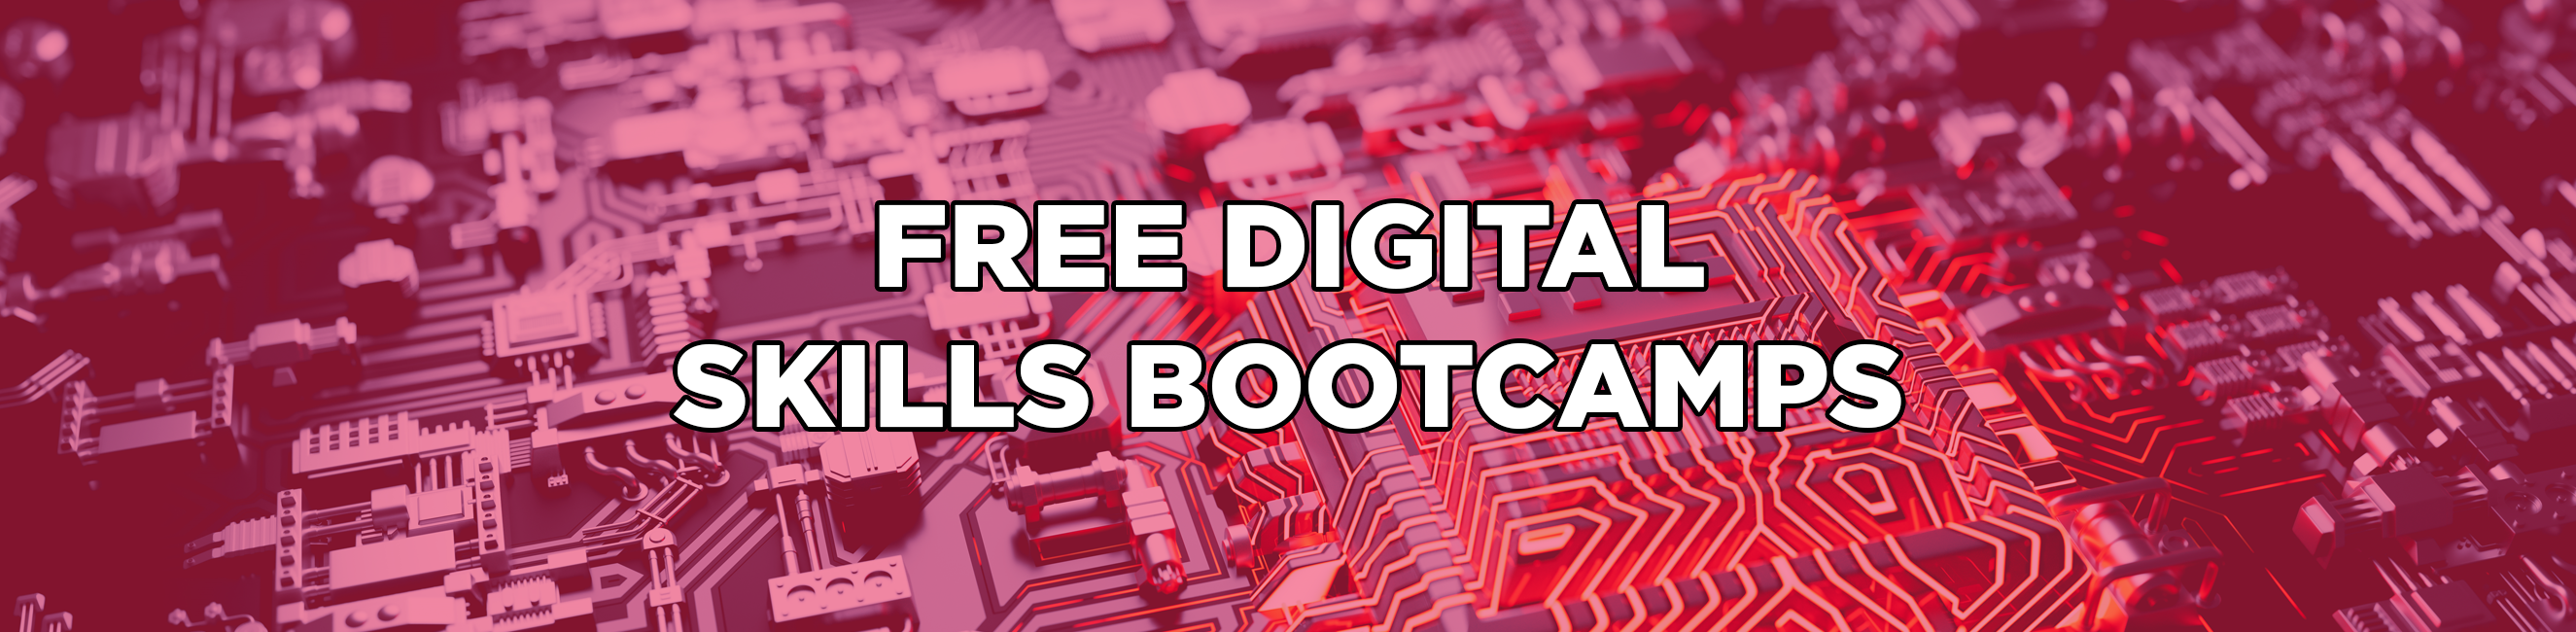 Free Digital Skills Bootcamp